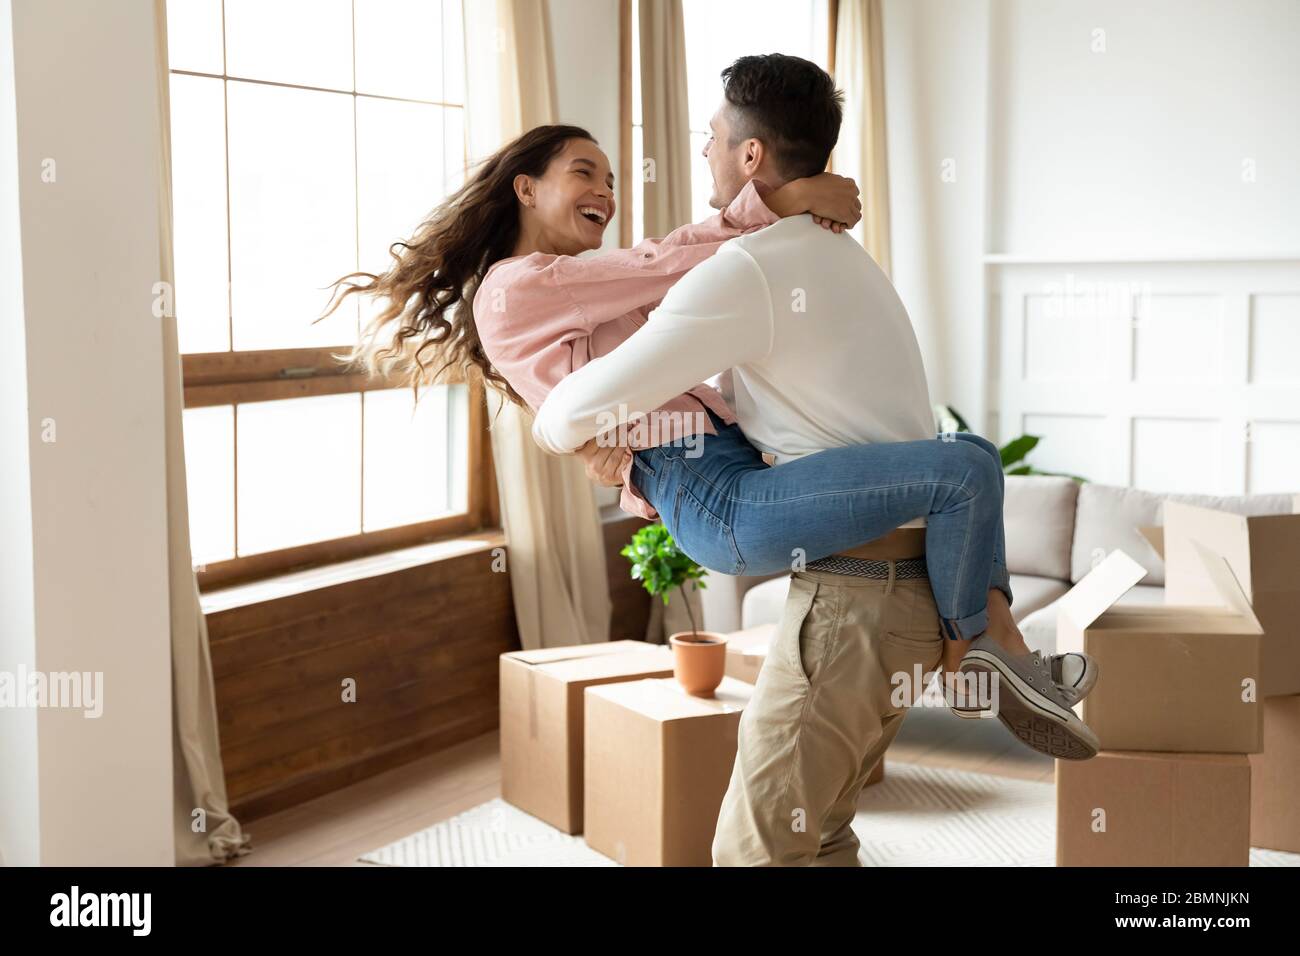 Loving husband lifting excited wife, celebrating moving day Stock Photo